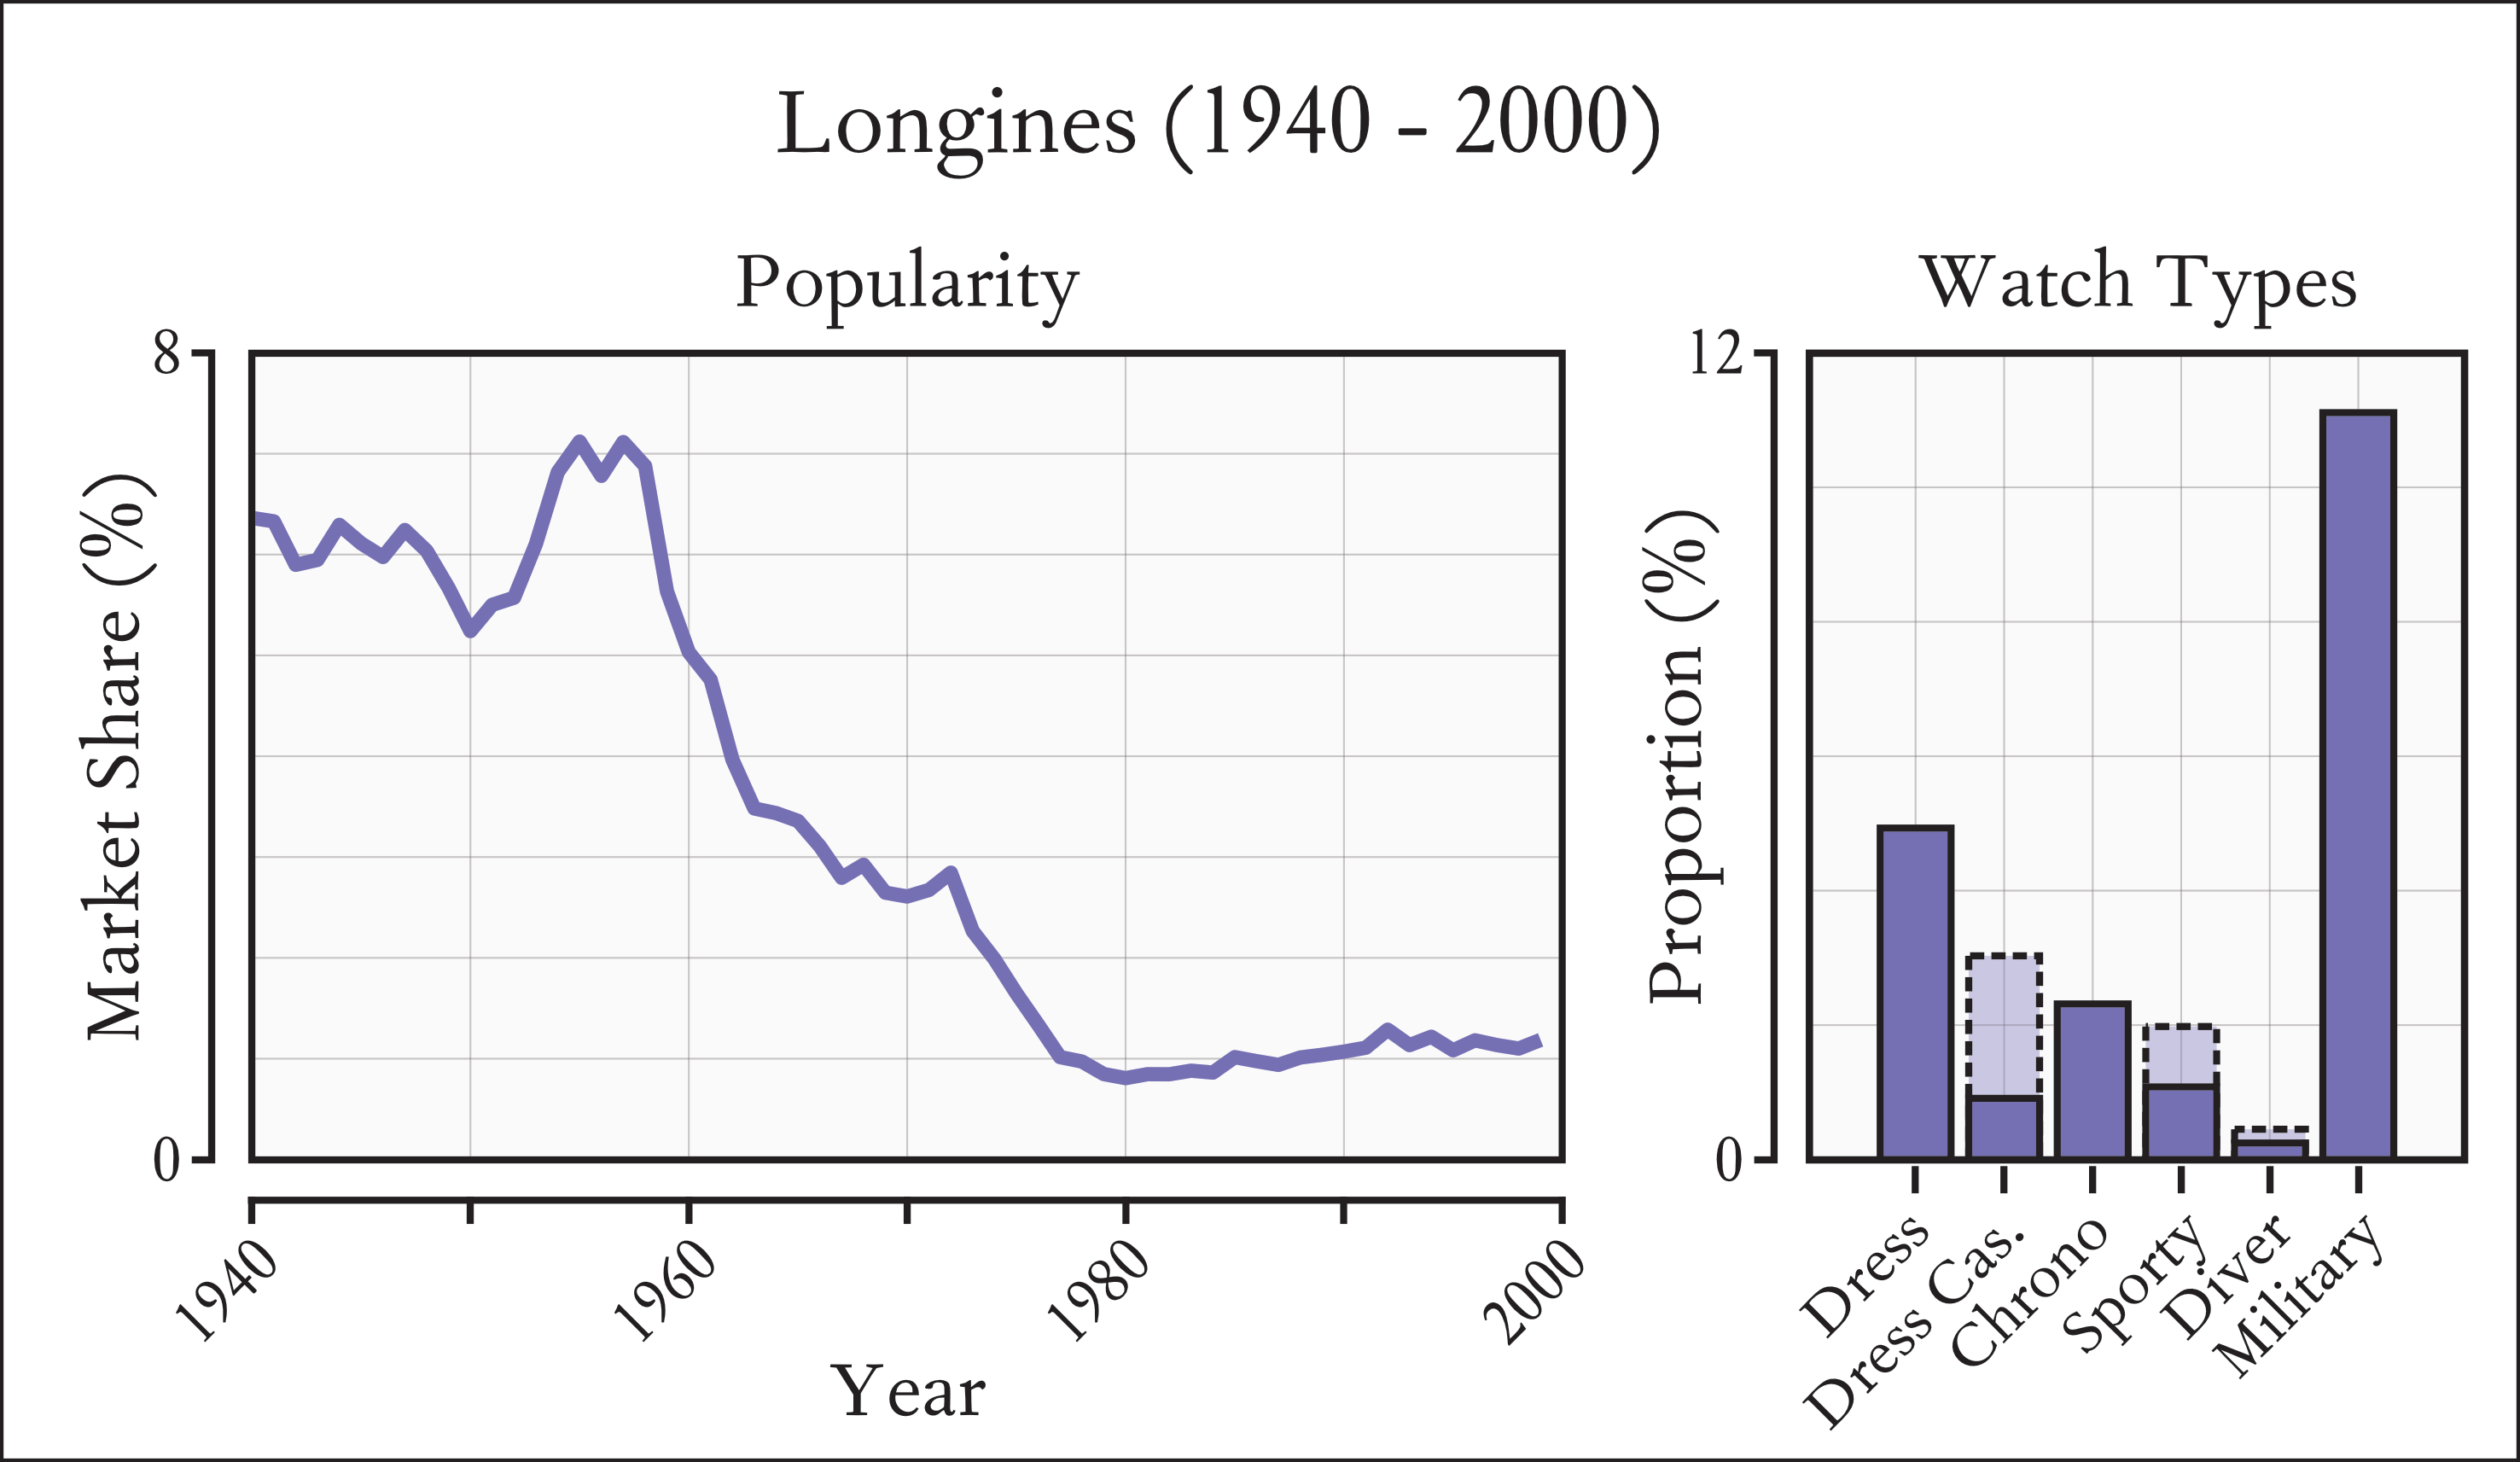 Distribution of Longines popularity between 1940-2000